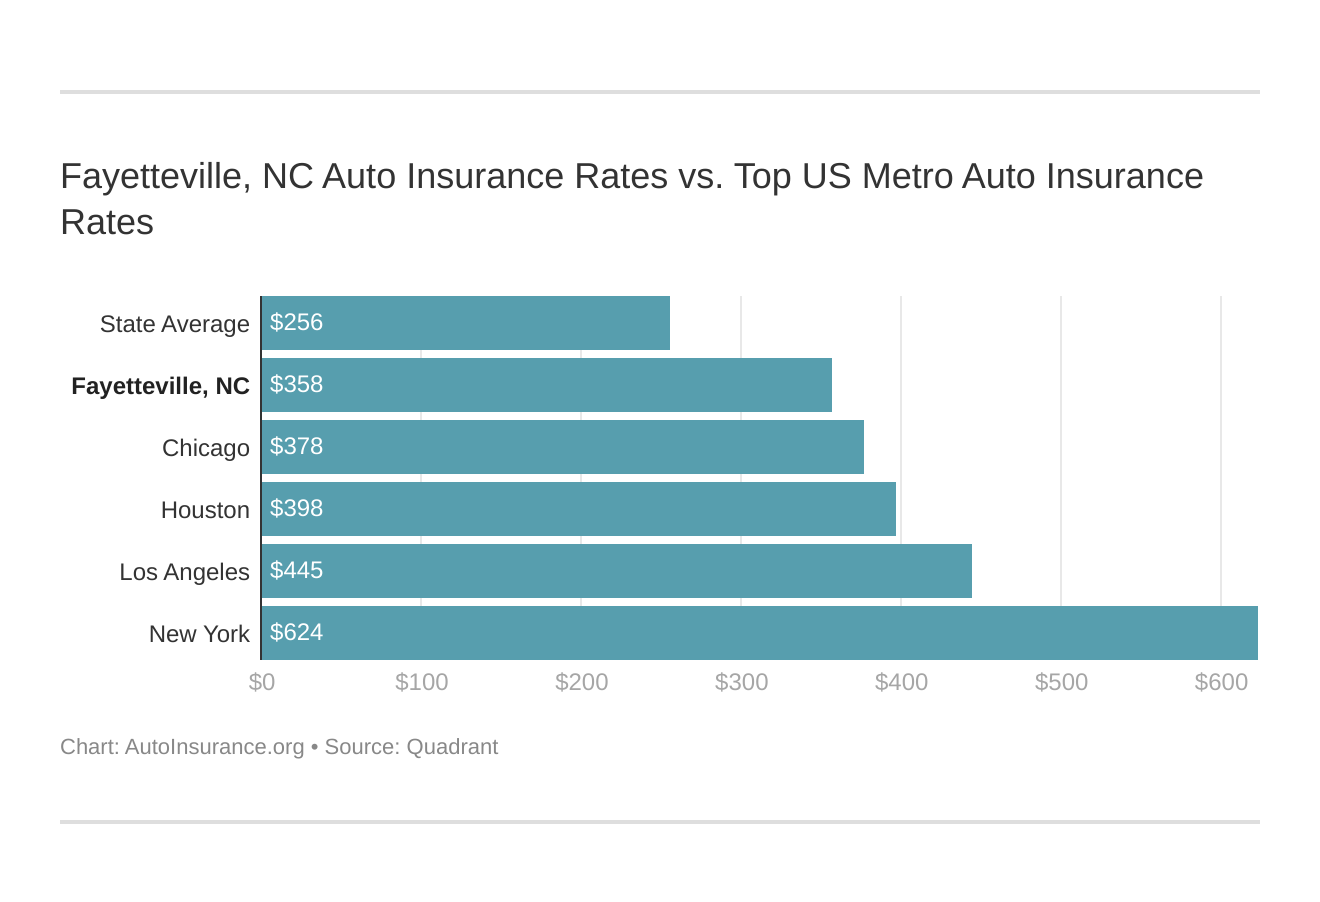 Fayetteville, NC Auto Insurance Rates vs. Top US Metro Auto Insurance Rates